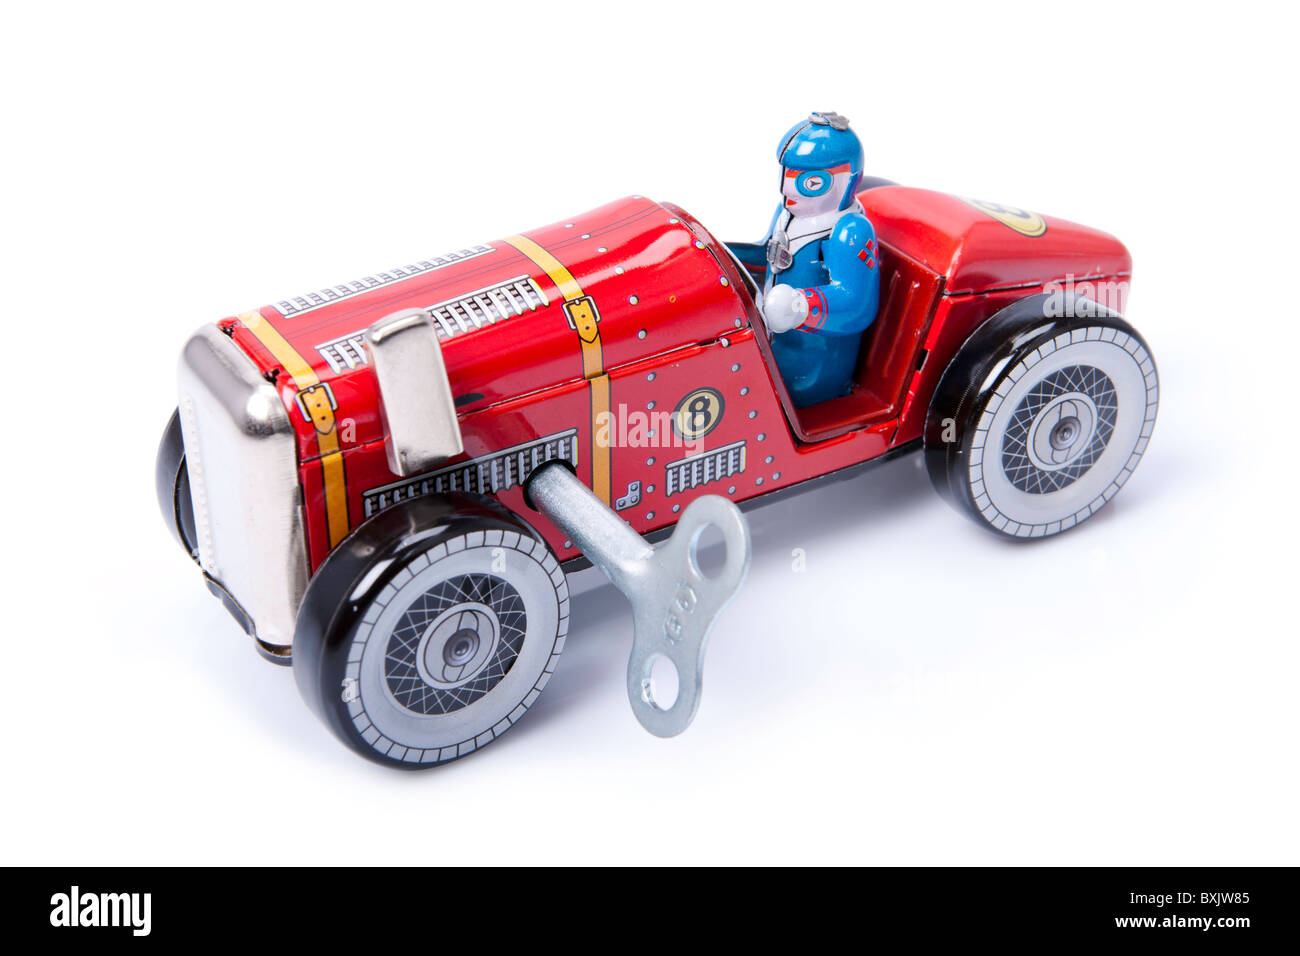 Clockwork toy car Stock Photo